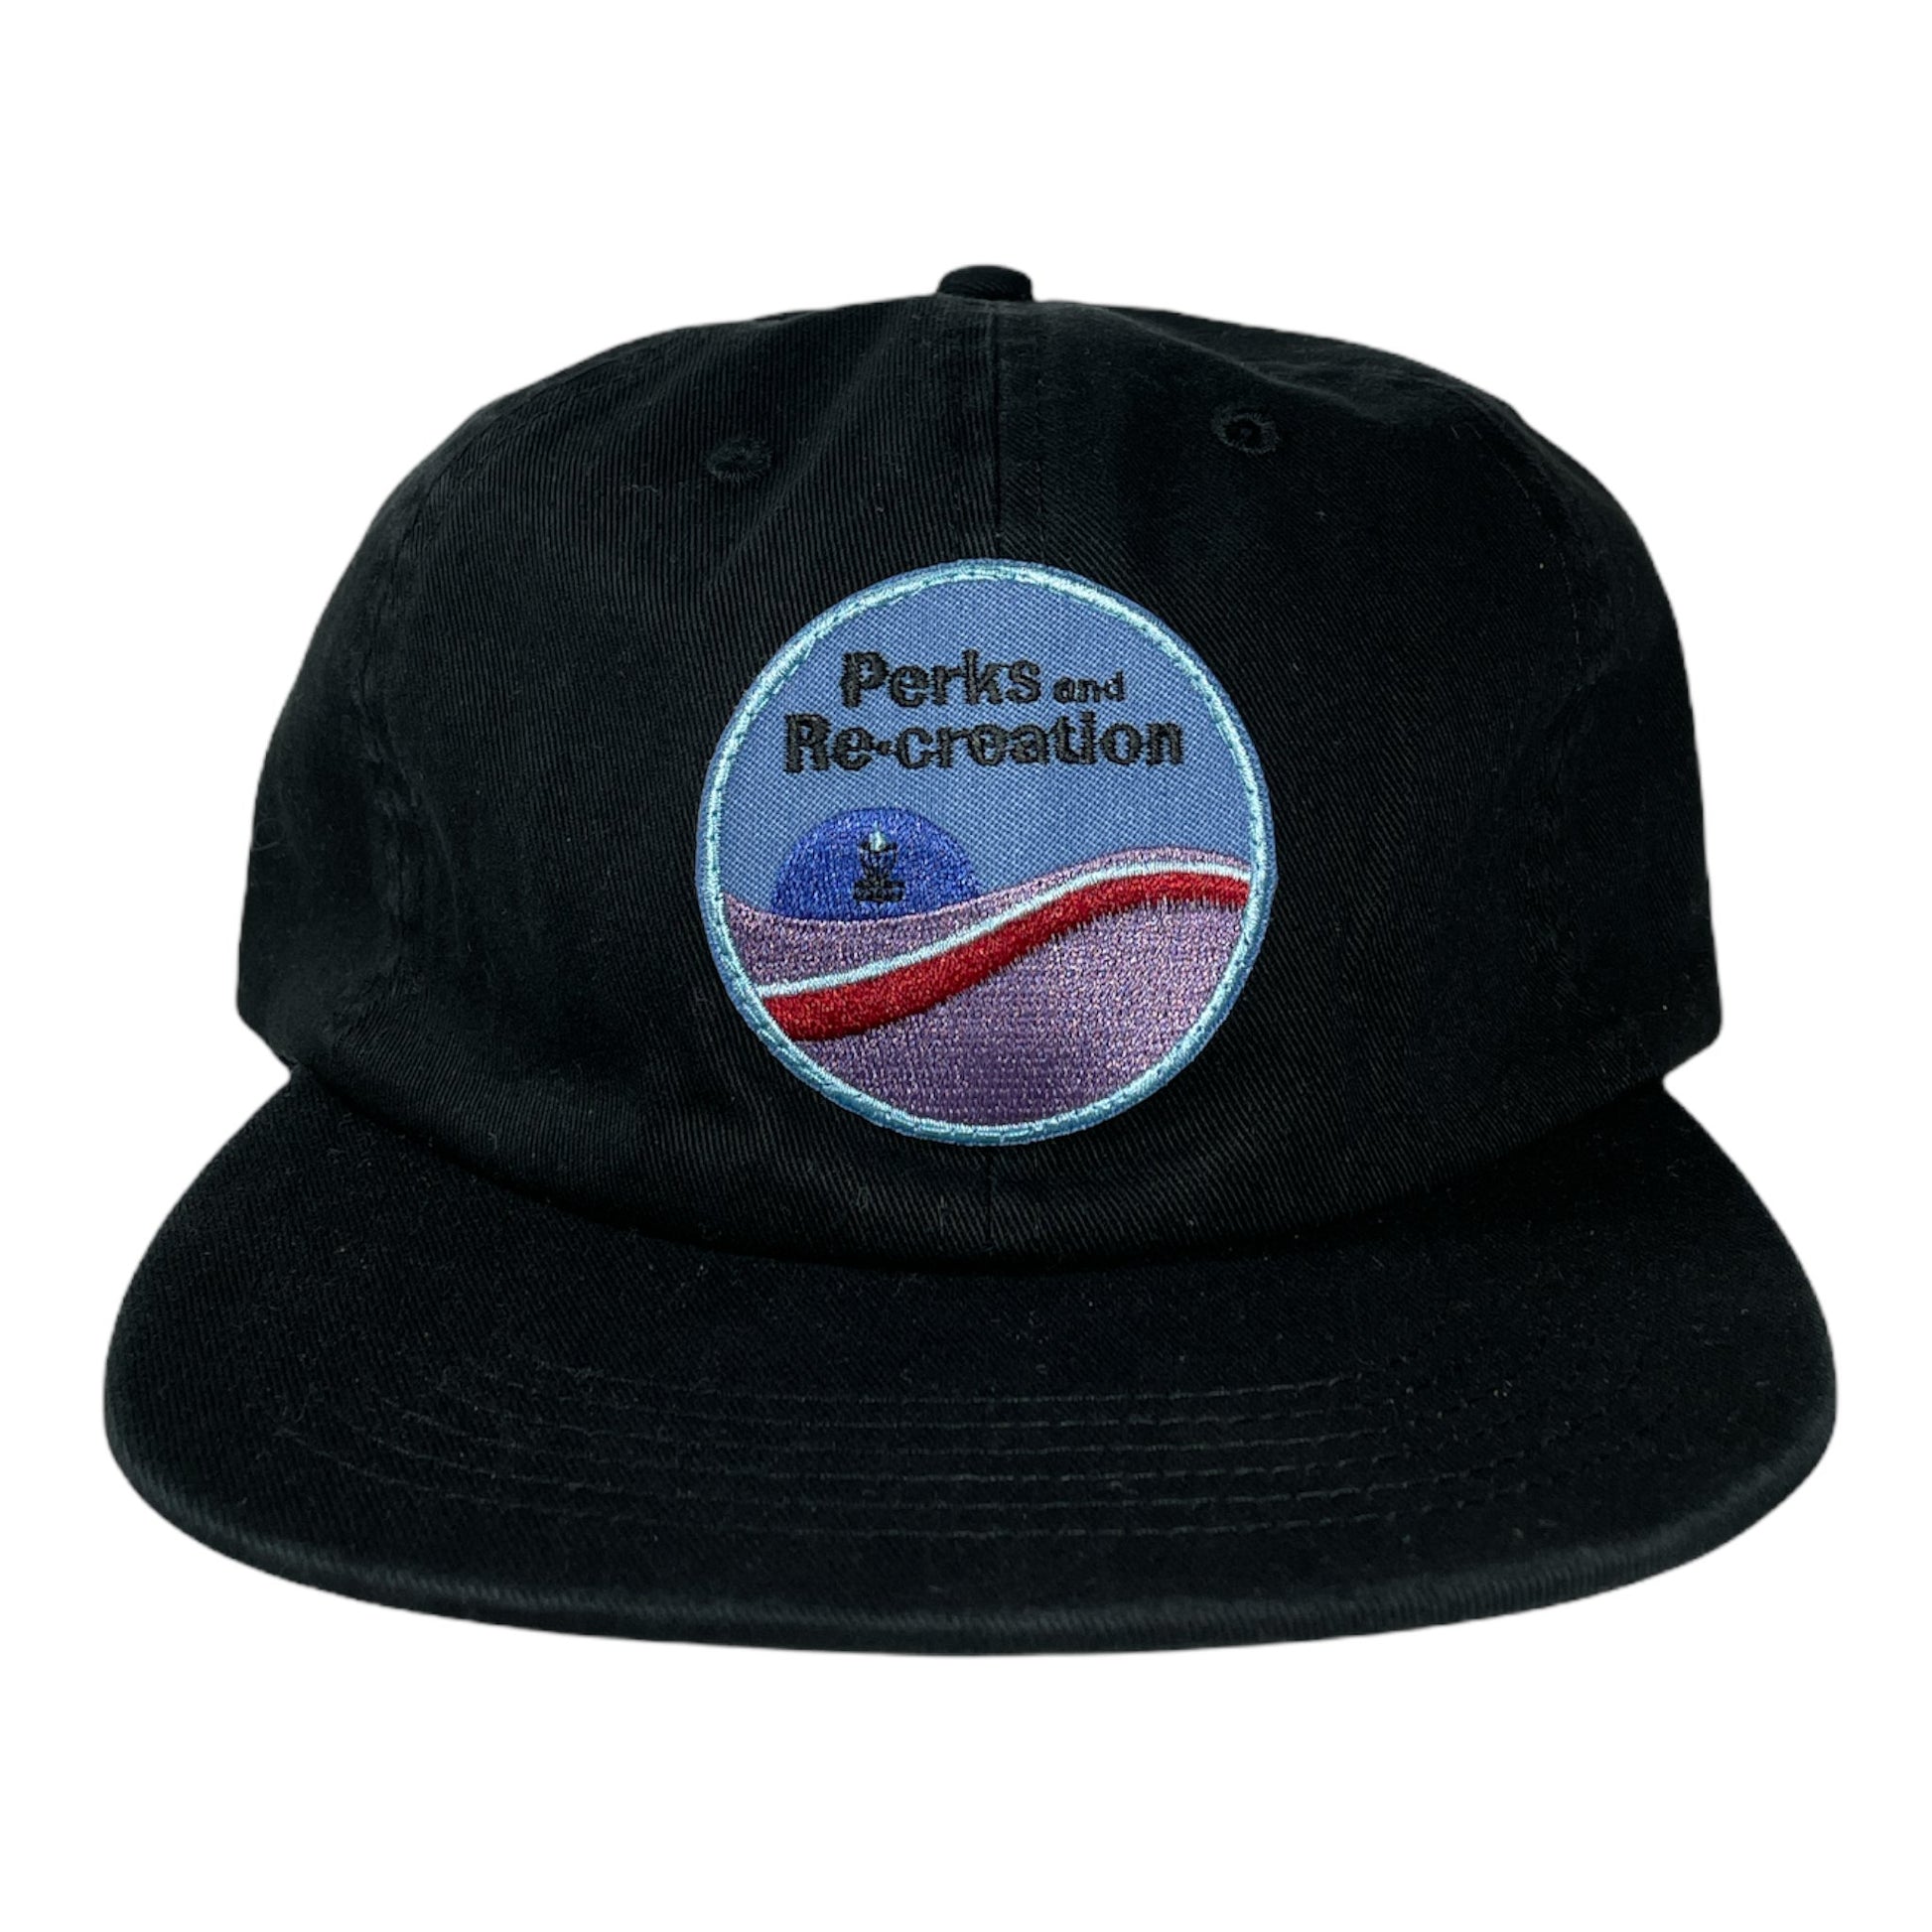 Perks and Re-creation Night Perk Ranger Hat Disc Golf